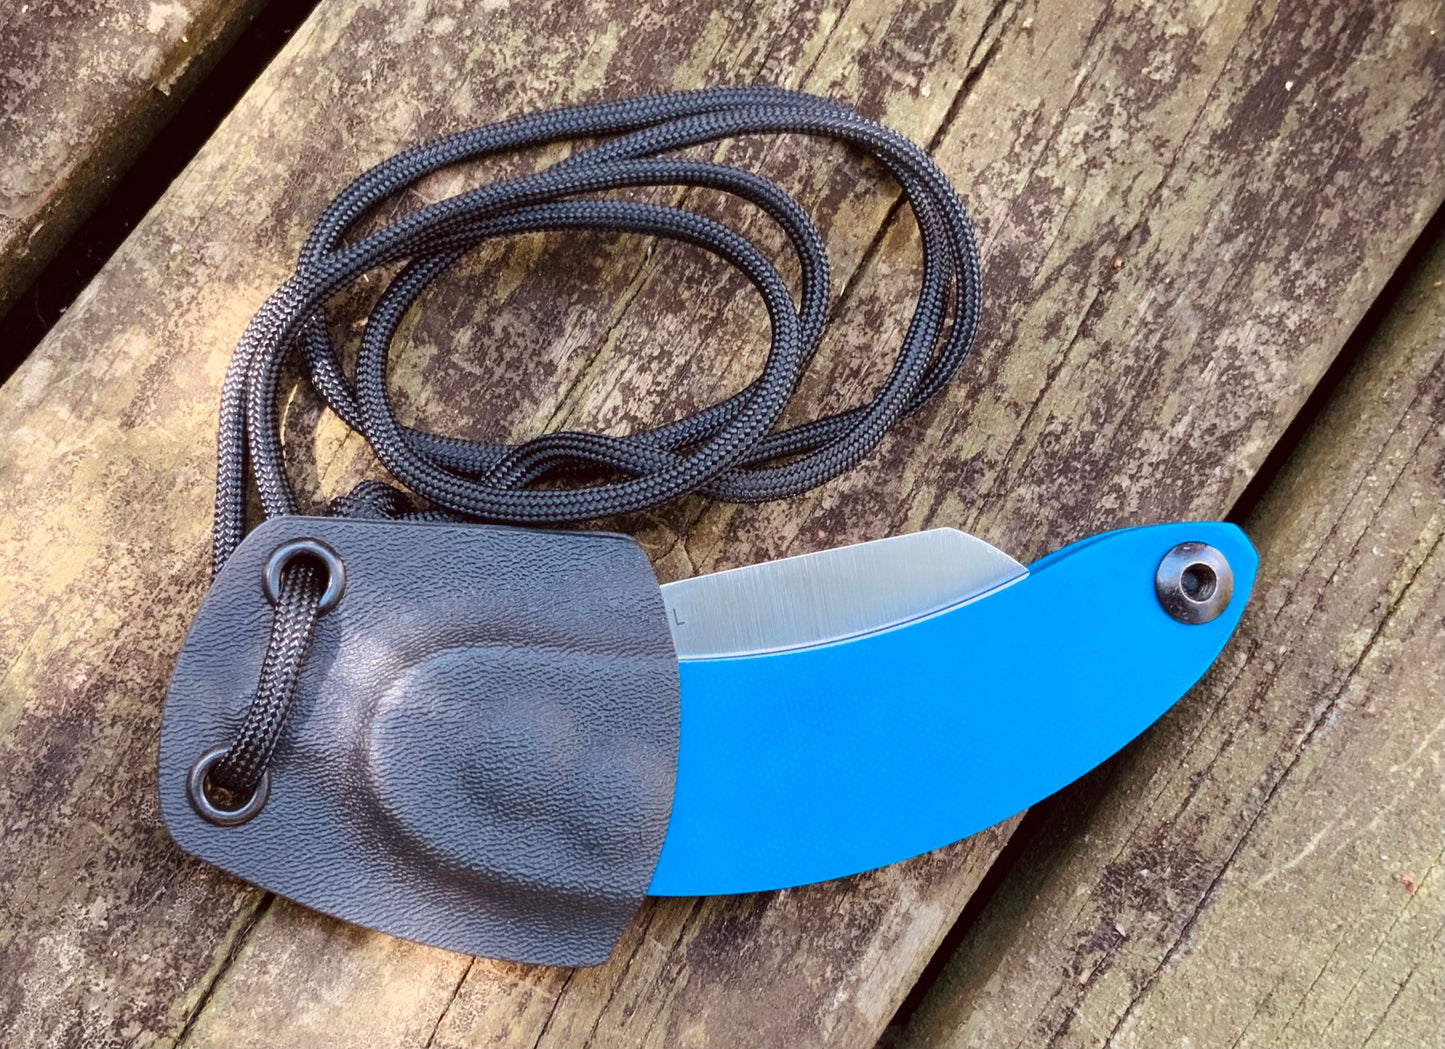 Banana Peel Folder and Custom Neck Sheath Combo shown in blue G10, folding inside of the kydex neck sheath